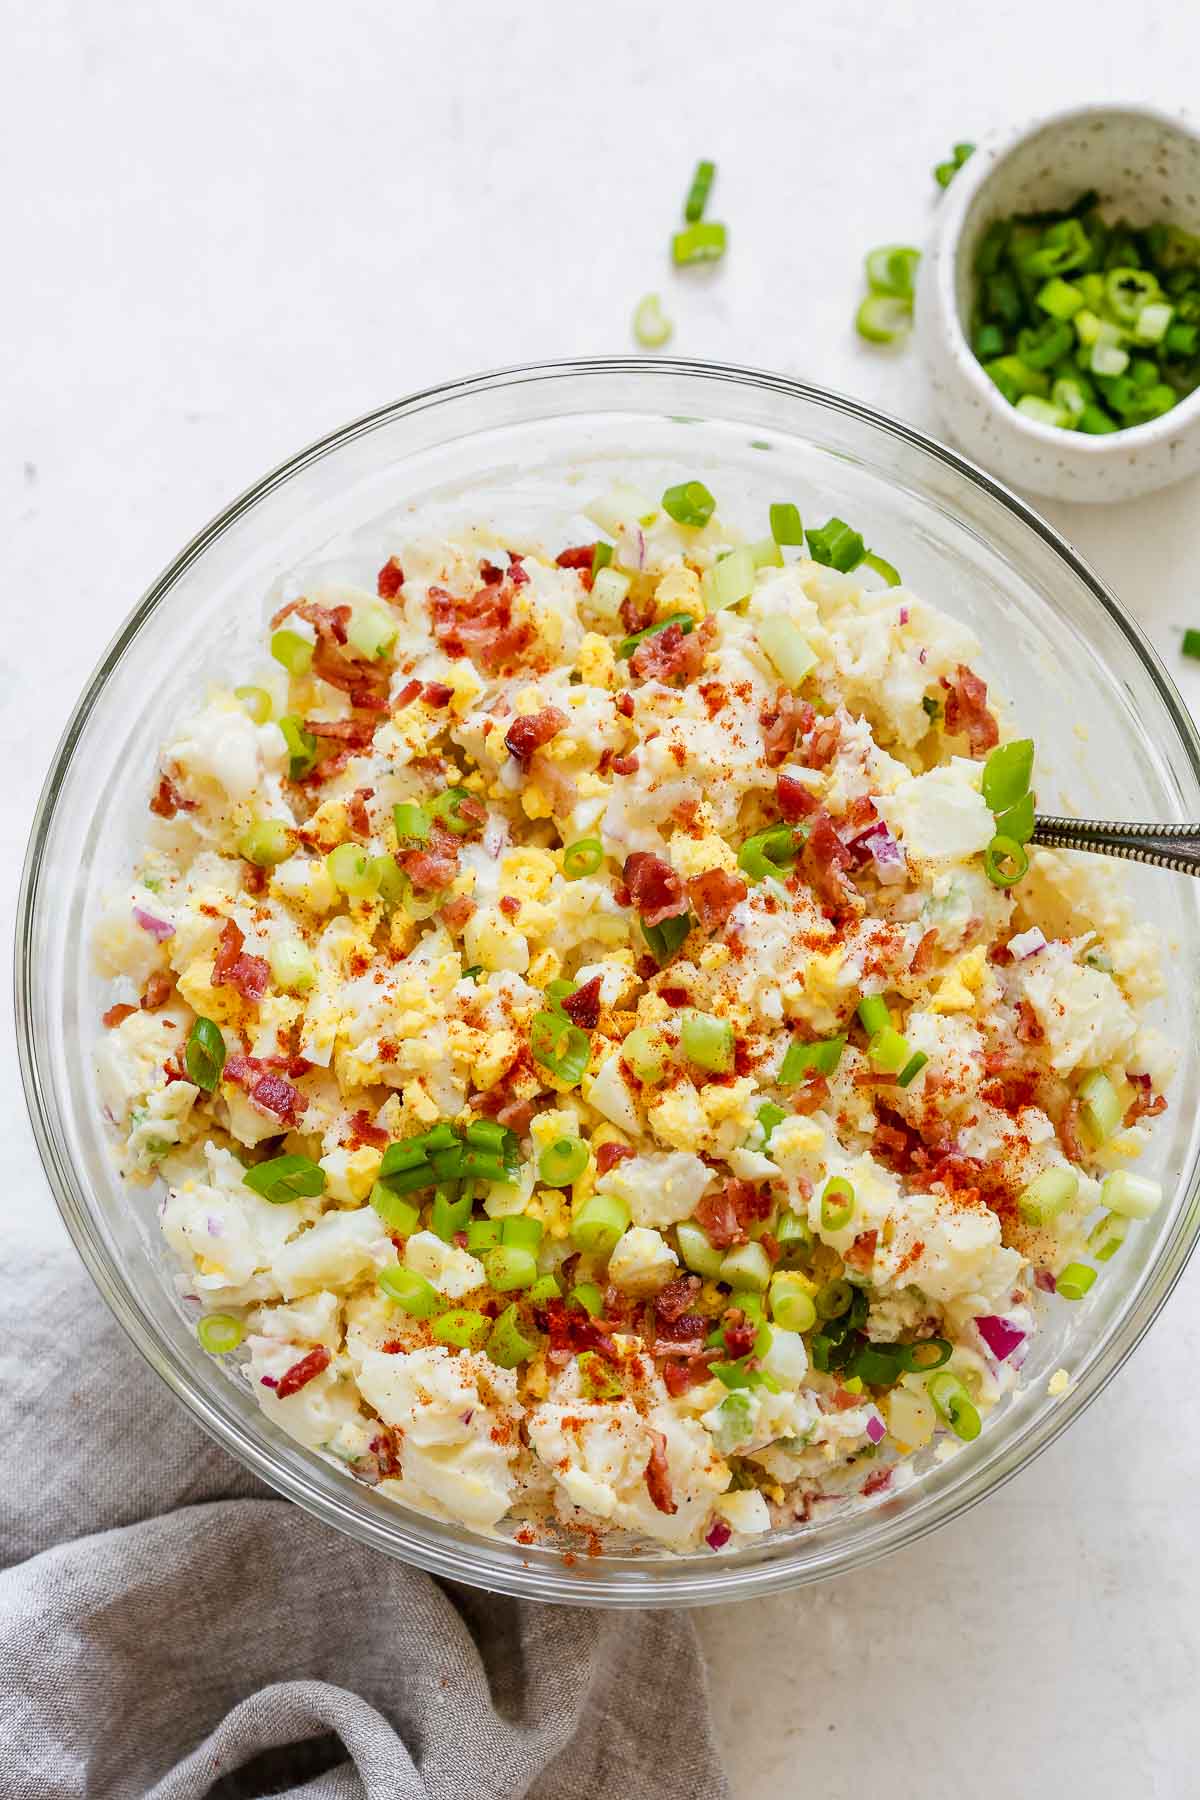 https://www.primaverakitchen.com/wp-content/uploads/2020/06/Healthy-Potato-Salad-Primavera-Kitchen-7.jpg